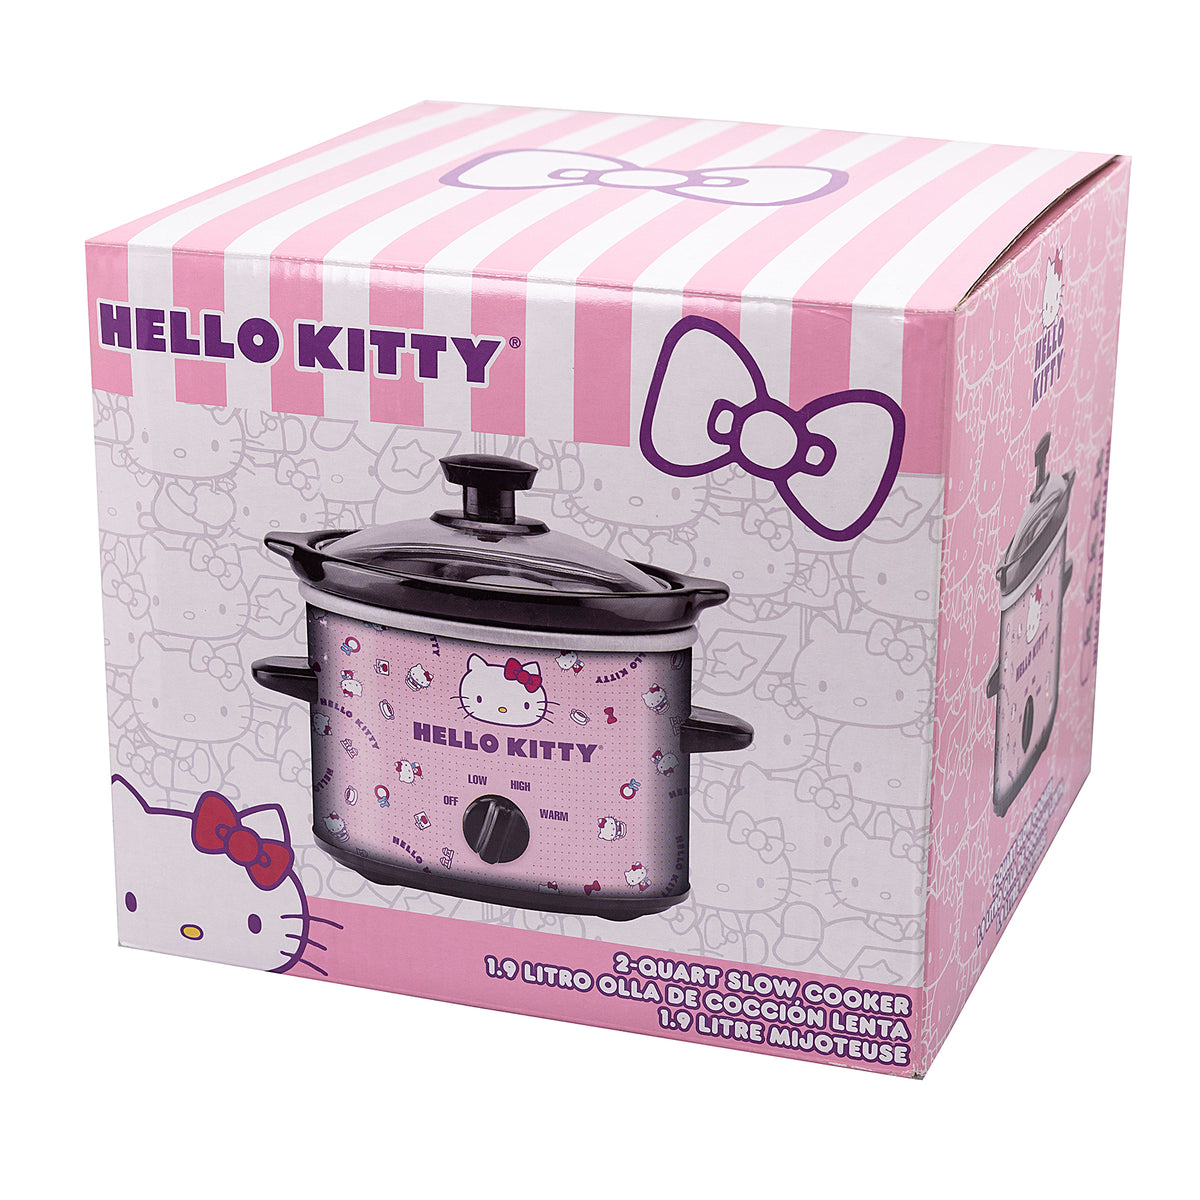 Hello Kitty 2-Quart Slow Cooker Electronic Uncanny Brands LLC   